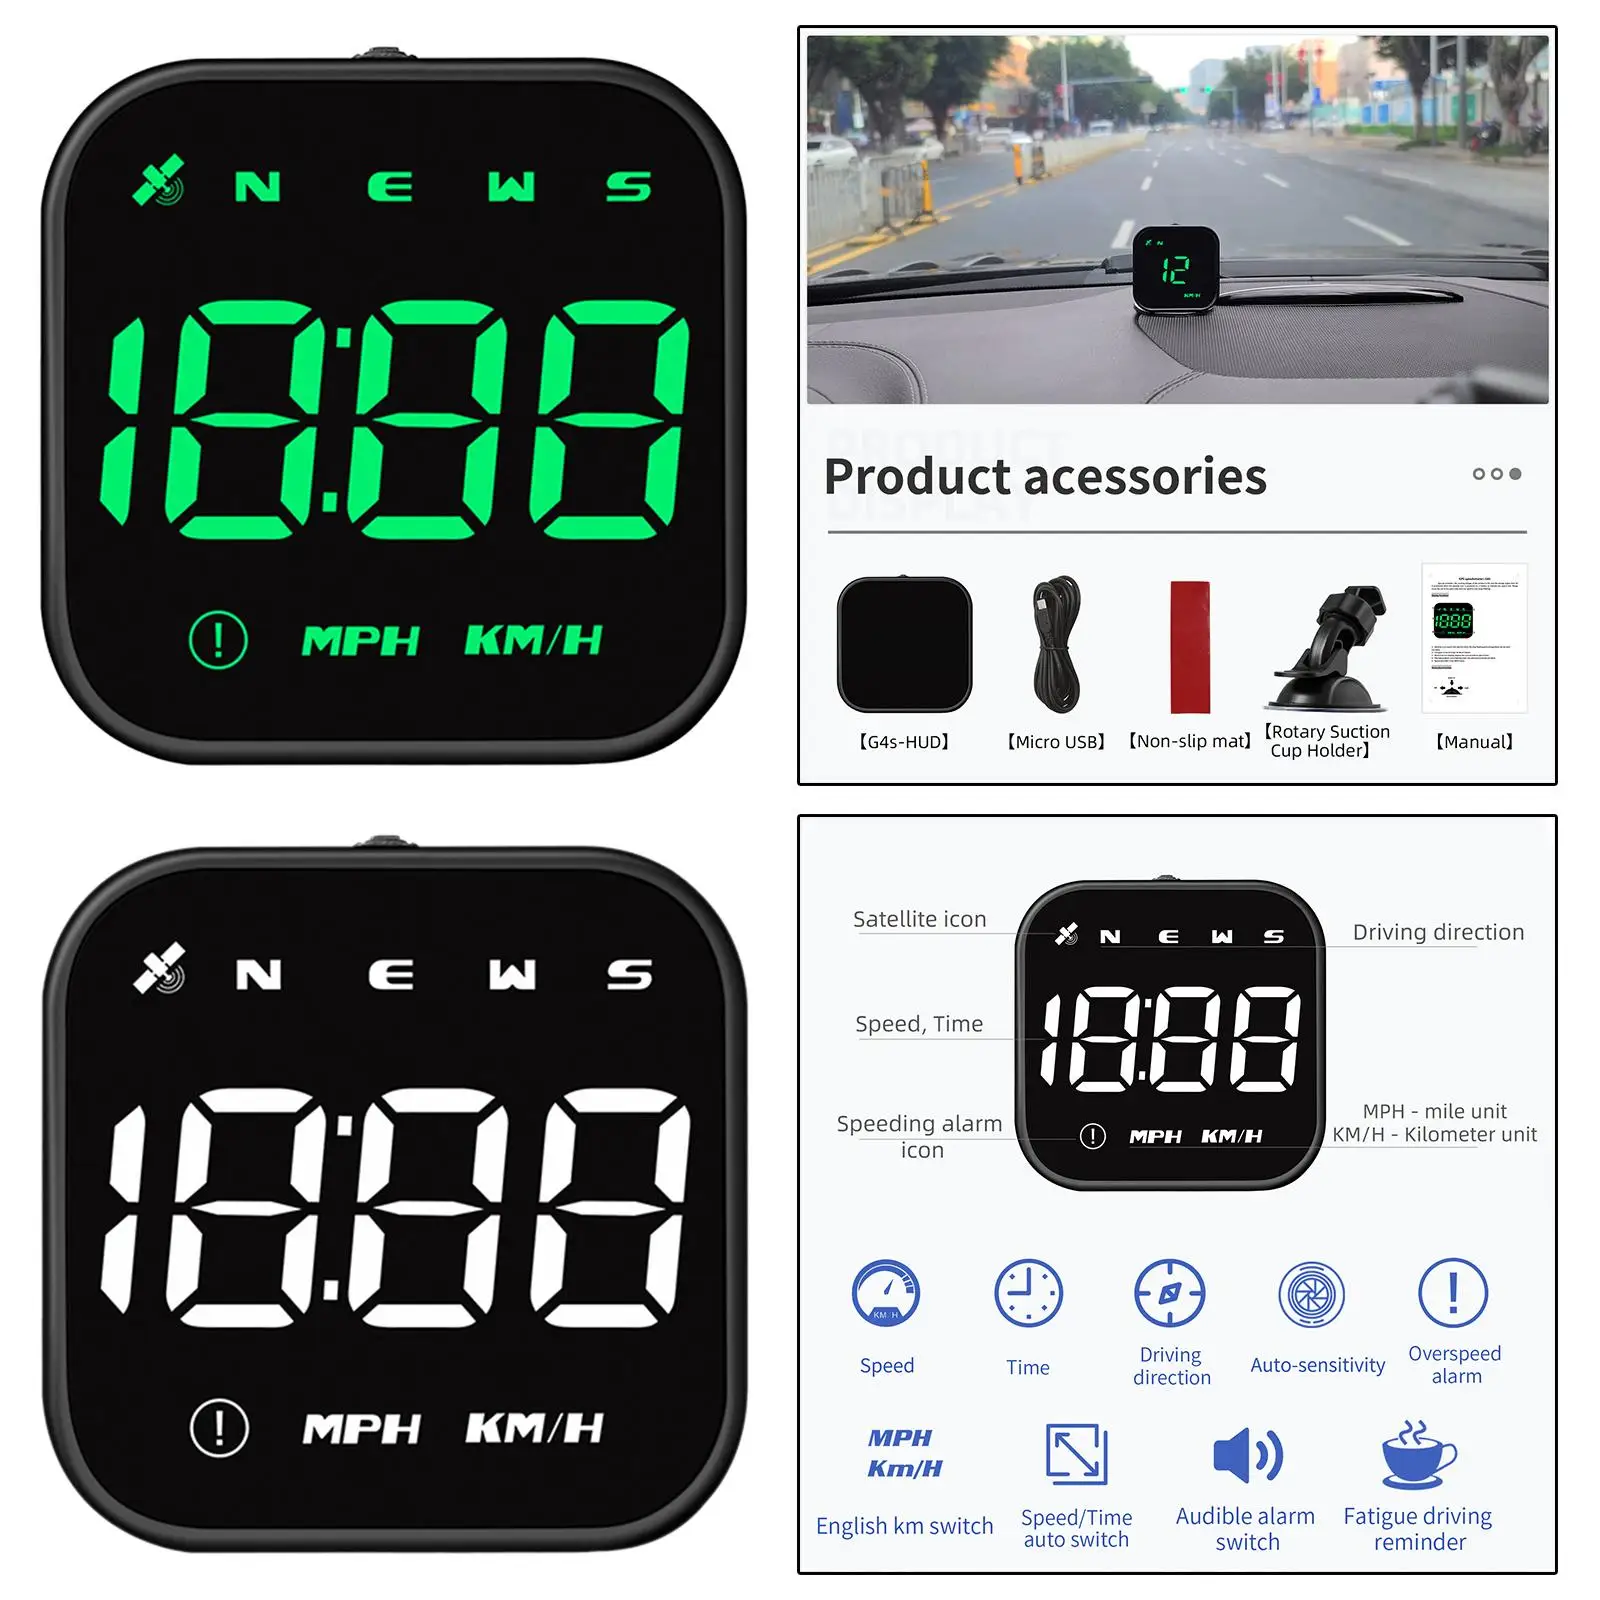 Car HUD Head up Display Compass Modern LED Display Digital Speed for Various Vehicles Buses Trucks